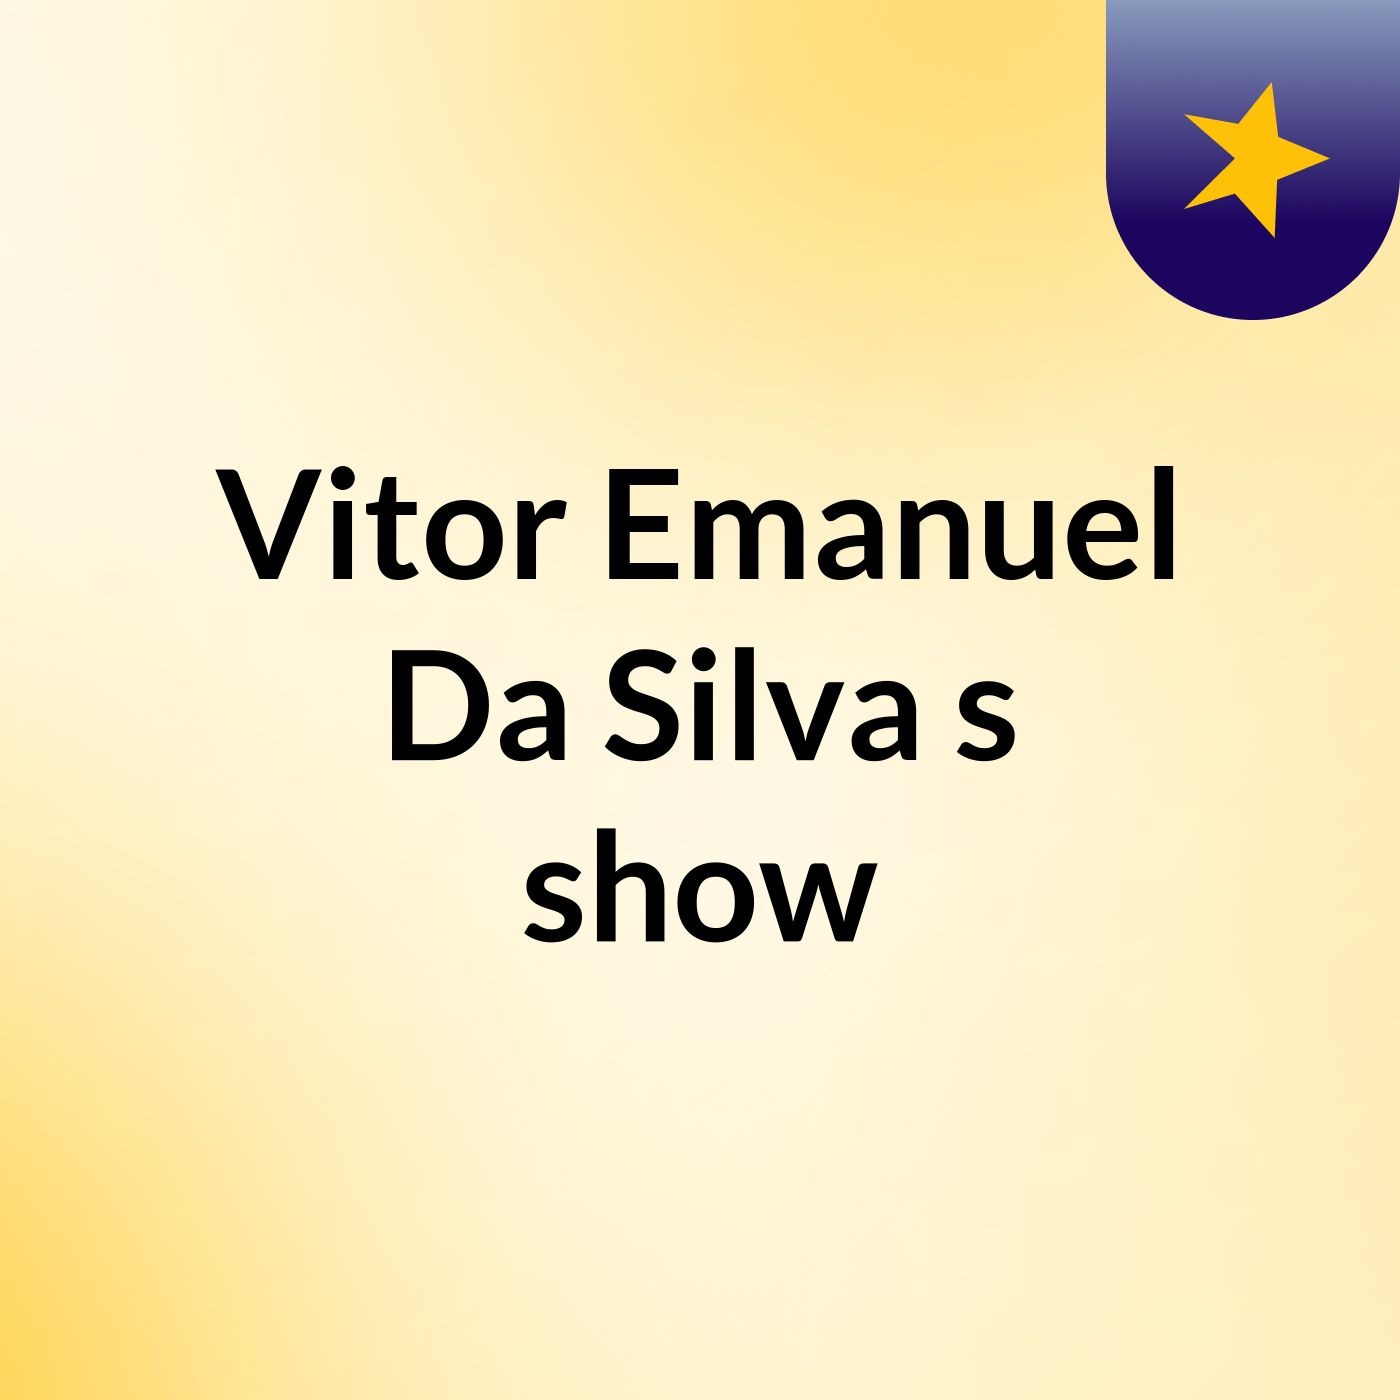 Vitor Emanuel Da Silva's show